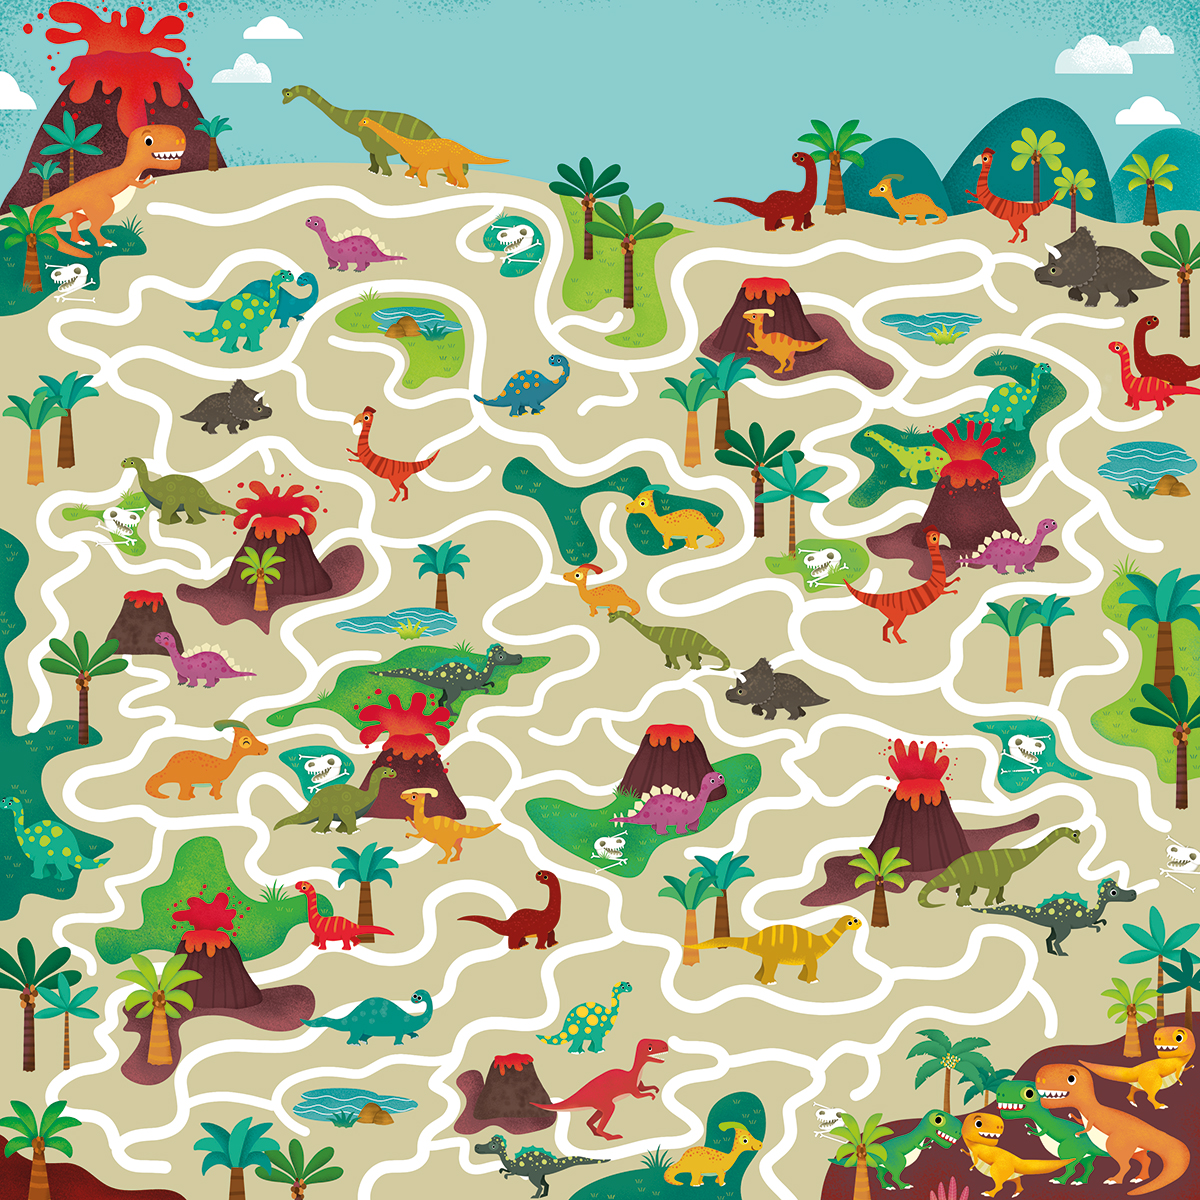 100 MAZE BOOK ! dinosaurs maze